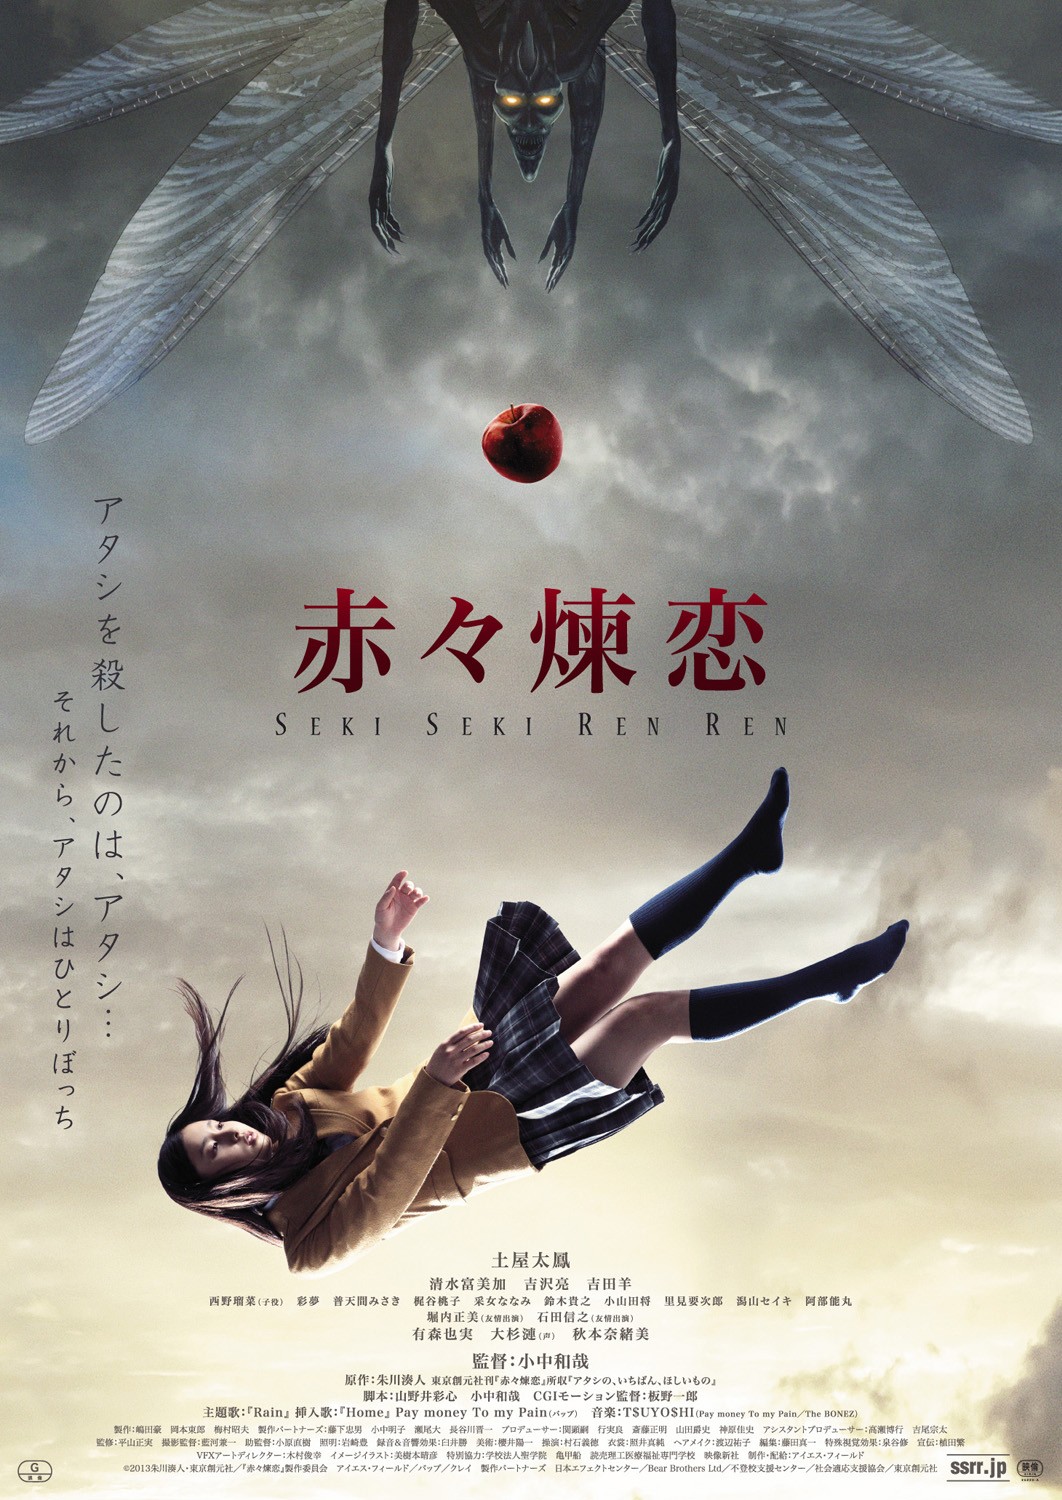 Extra Large Movie Poster Image for Sekiseki Renren 